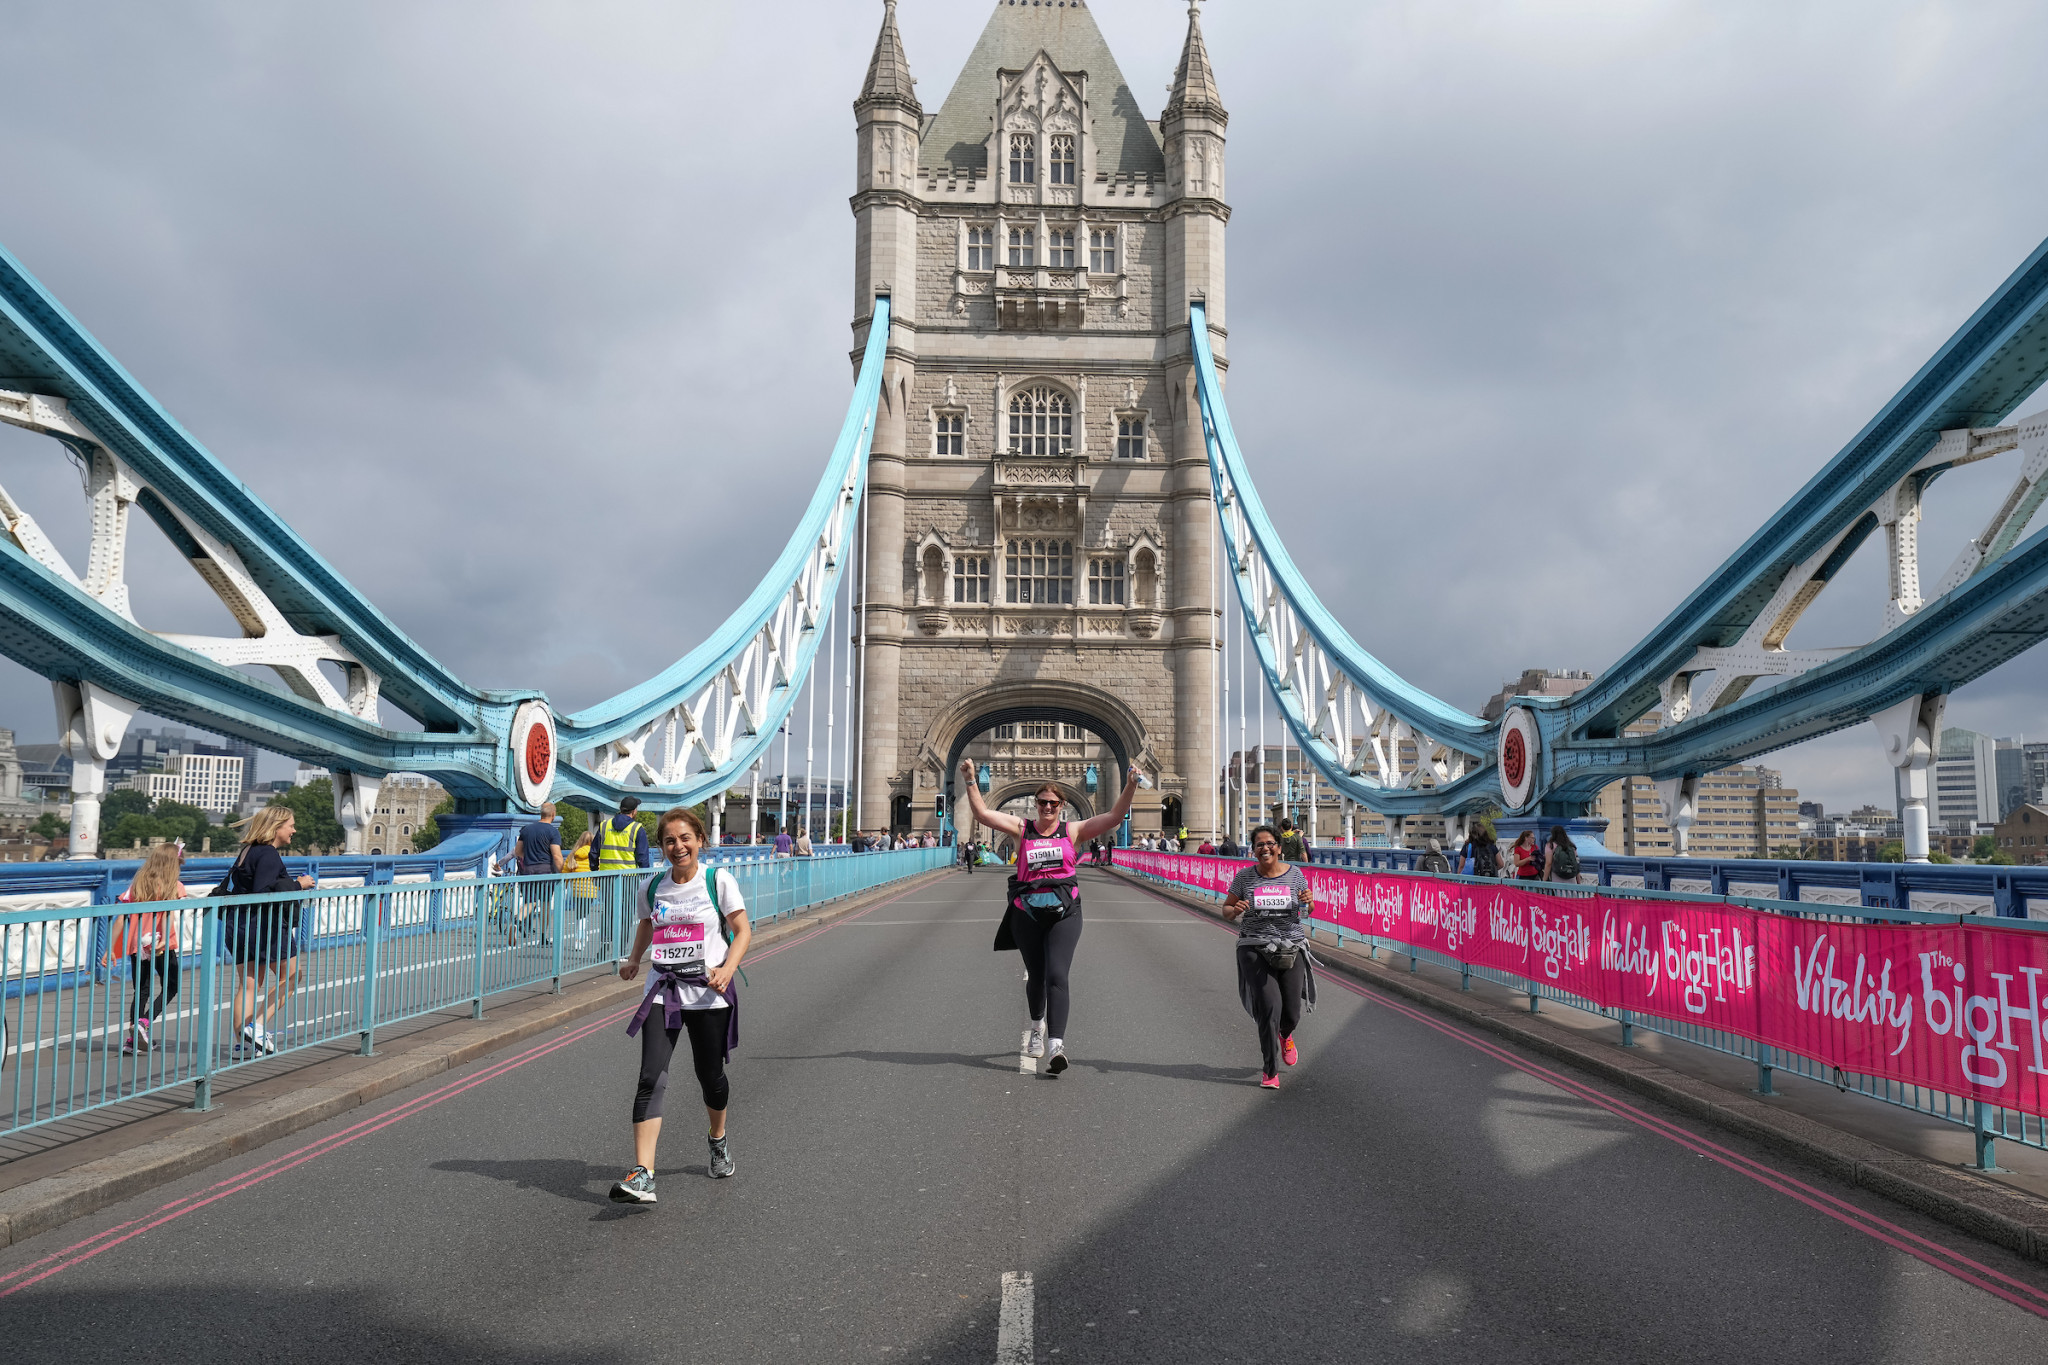 The race began at London's Tower Bridge ©The Big Half